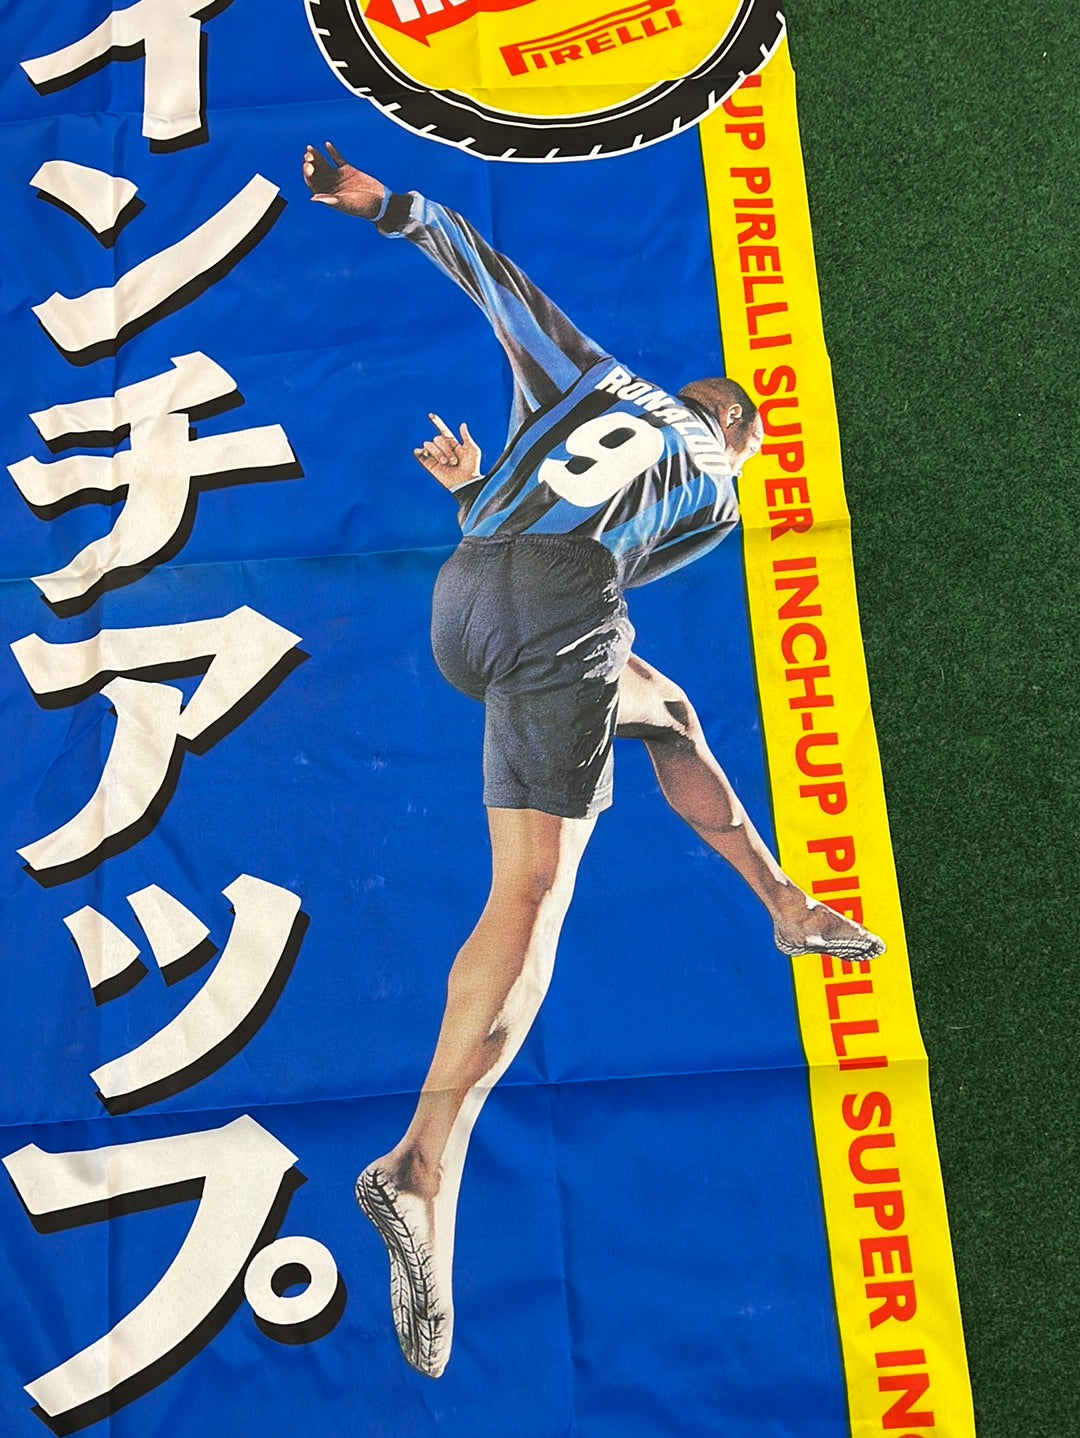 PIRELLI Tires - Ronaldo Advertising Nobori Banner